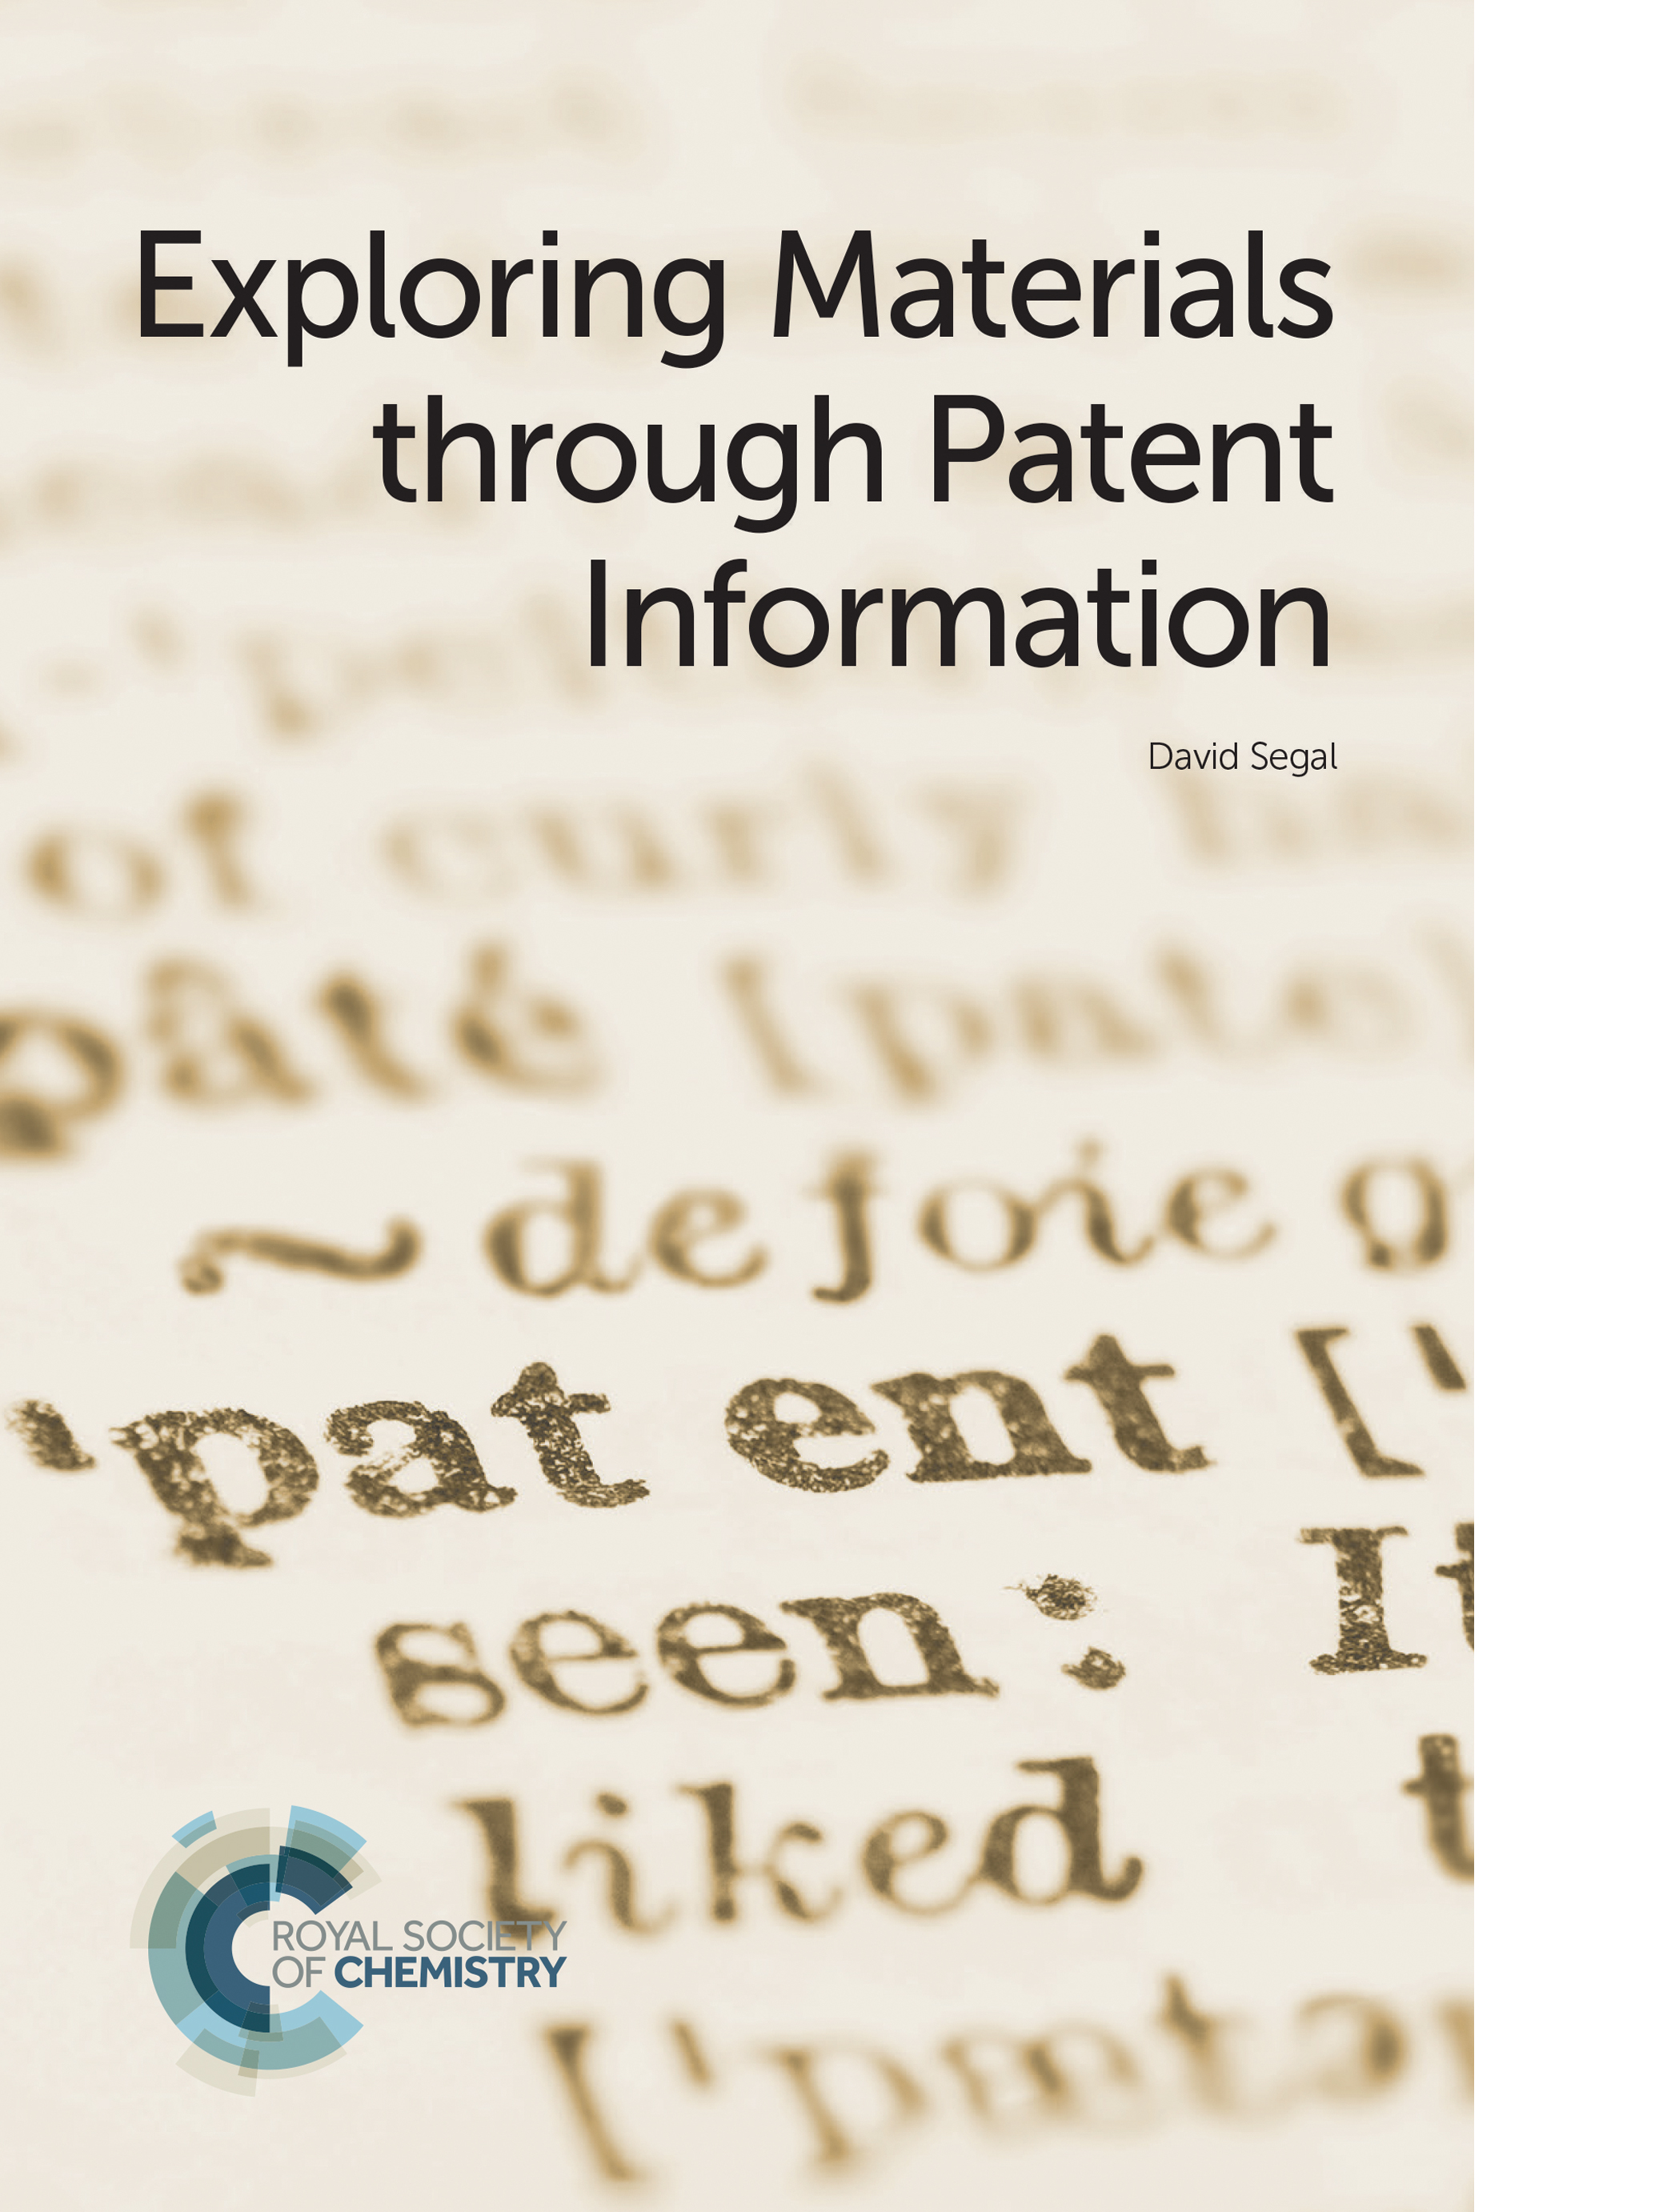 patent information